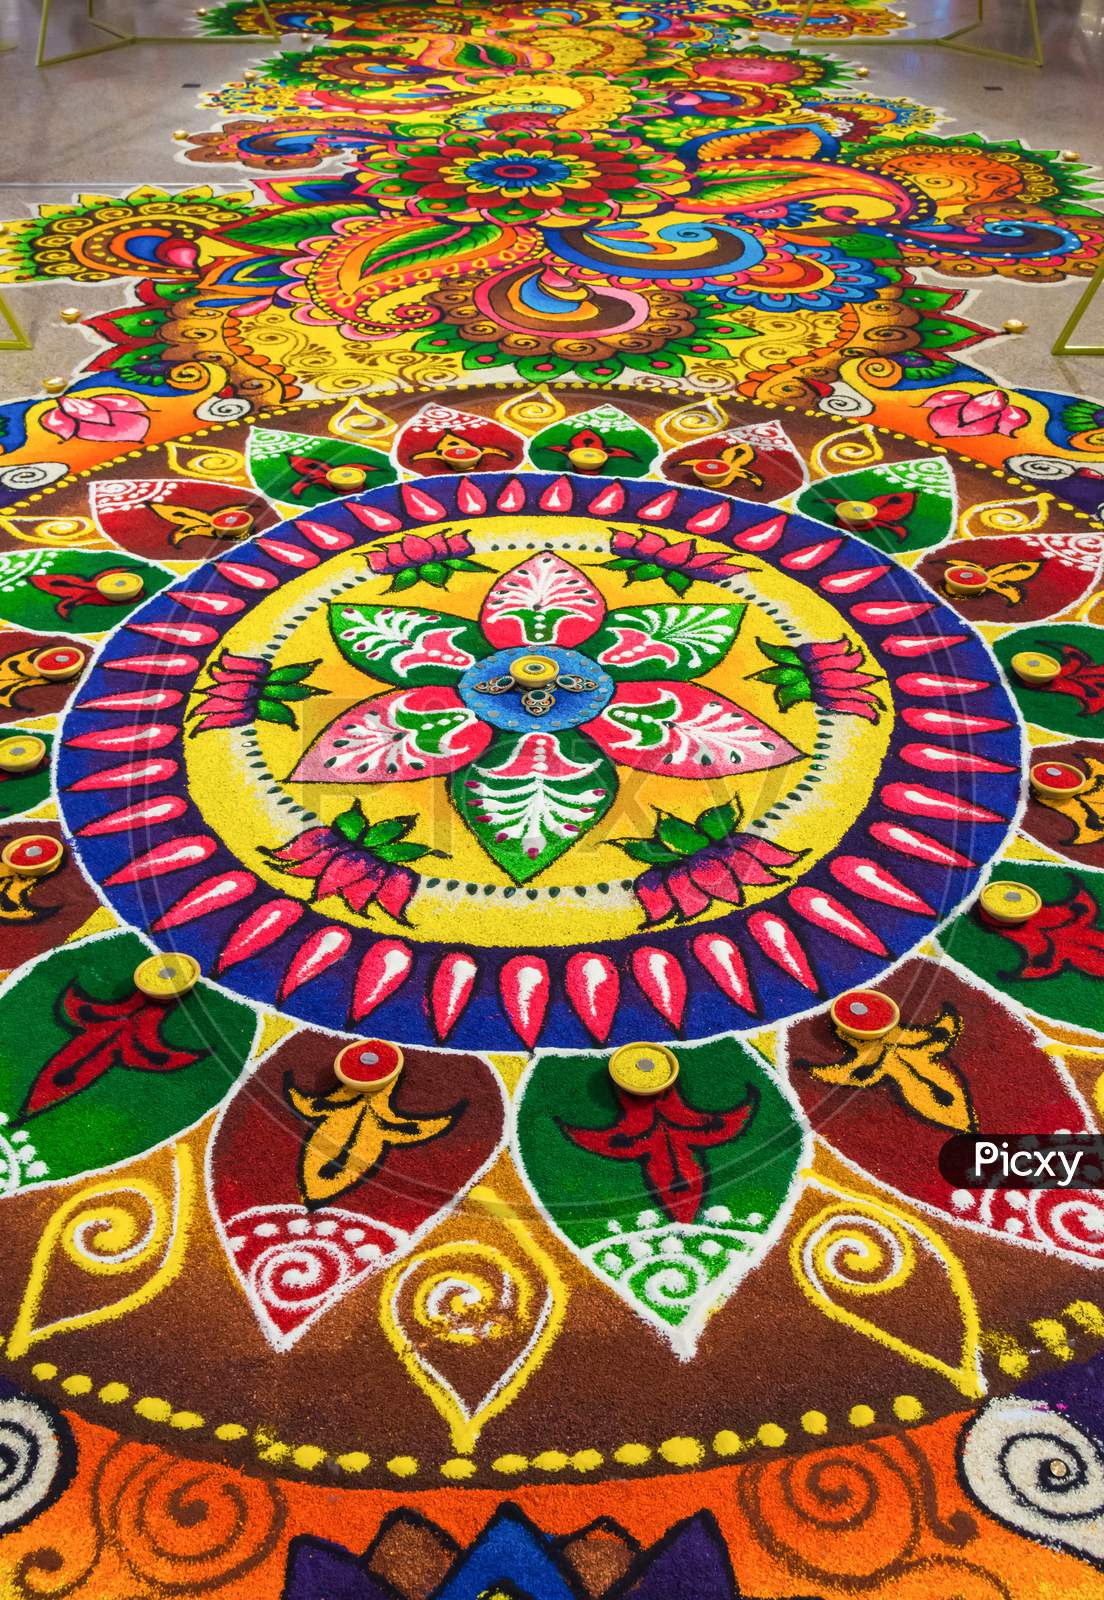 Beautiful Colorful Indian Traditional Rangoli Decoration For Diwali Or Deepavali Celebration